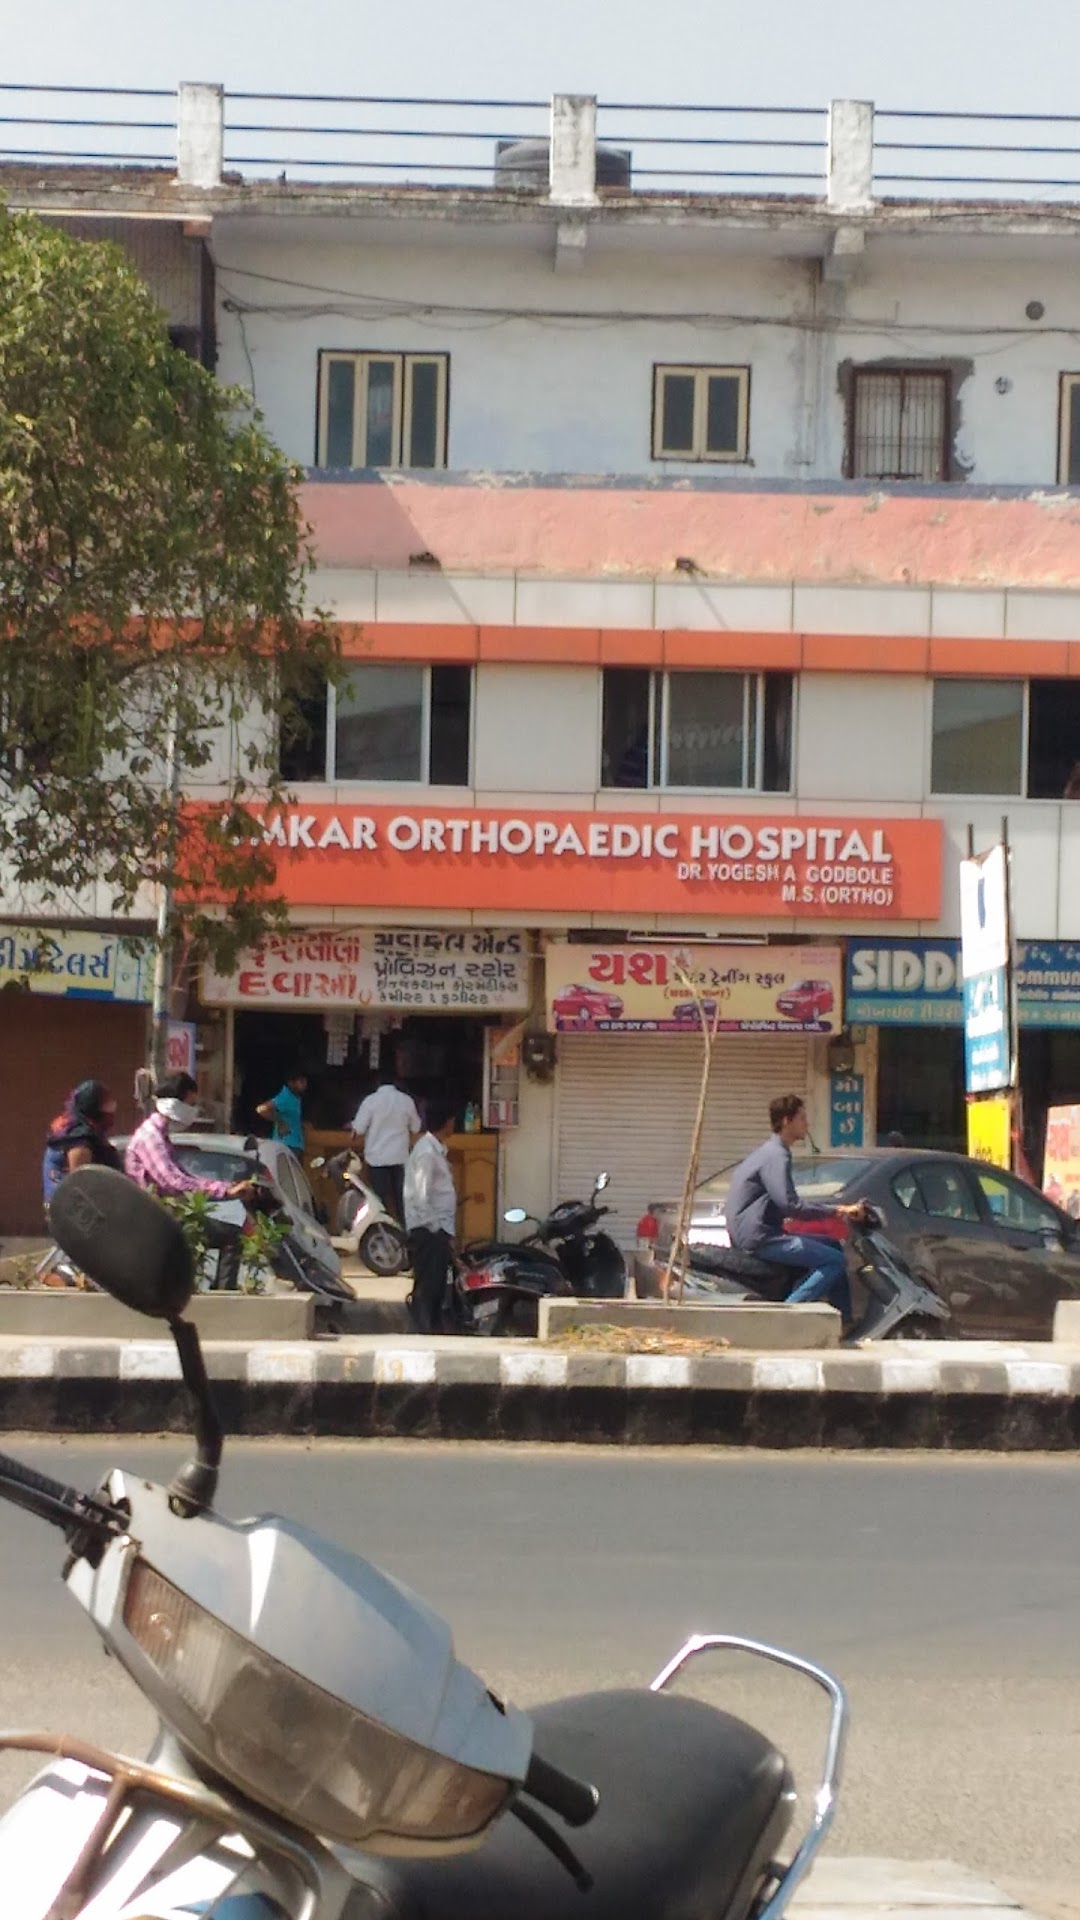 Omkar Orthopaedic Hospital